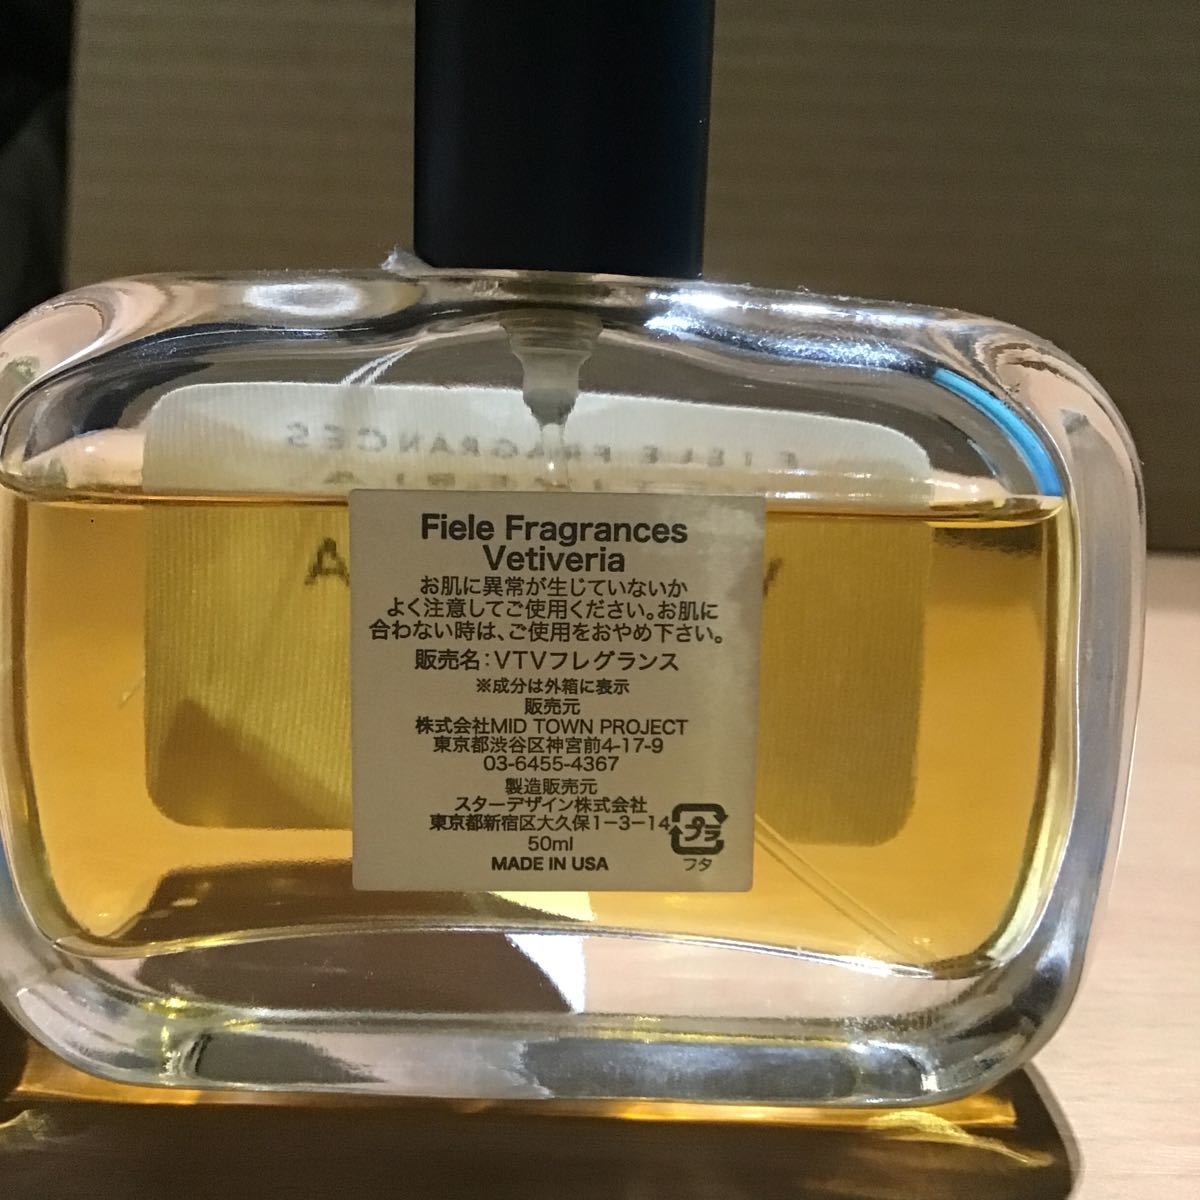 FIELE FRAGRANCES フィエールフレグランス Vetiveria（ベチベリア） eau de parfum / 50ml 香水 FK